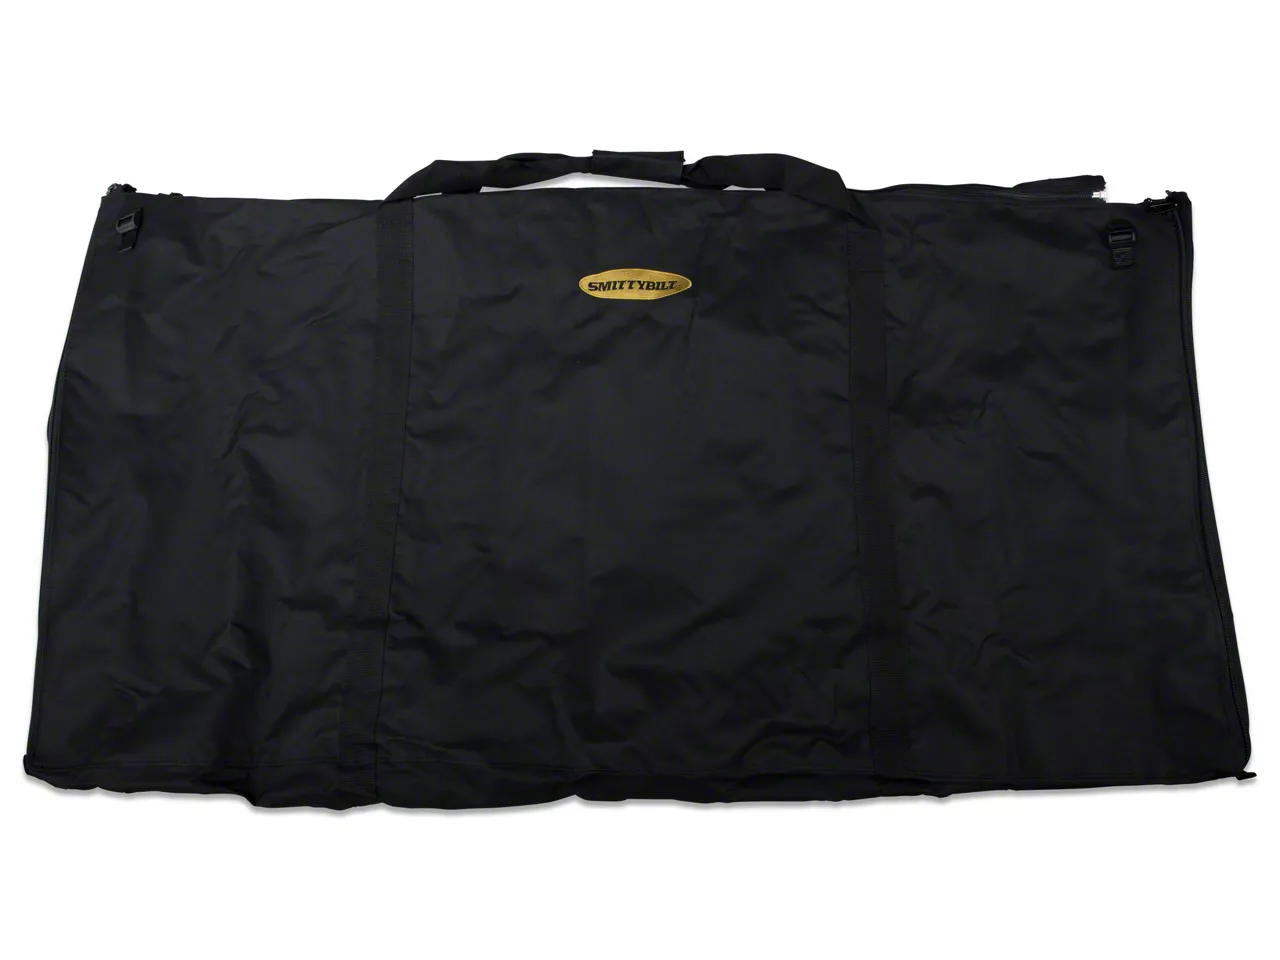 Smittybiltストレージバッグソフトトップサイドウィンドウペアブラック595101Smittybilt Storage Bag Soft Top Side Windows Pair Black 5